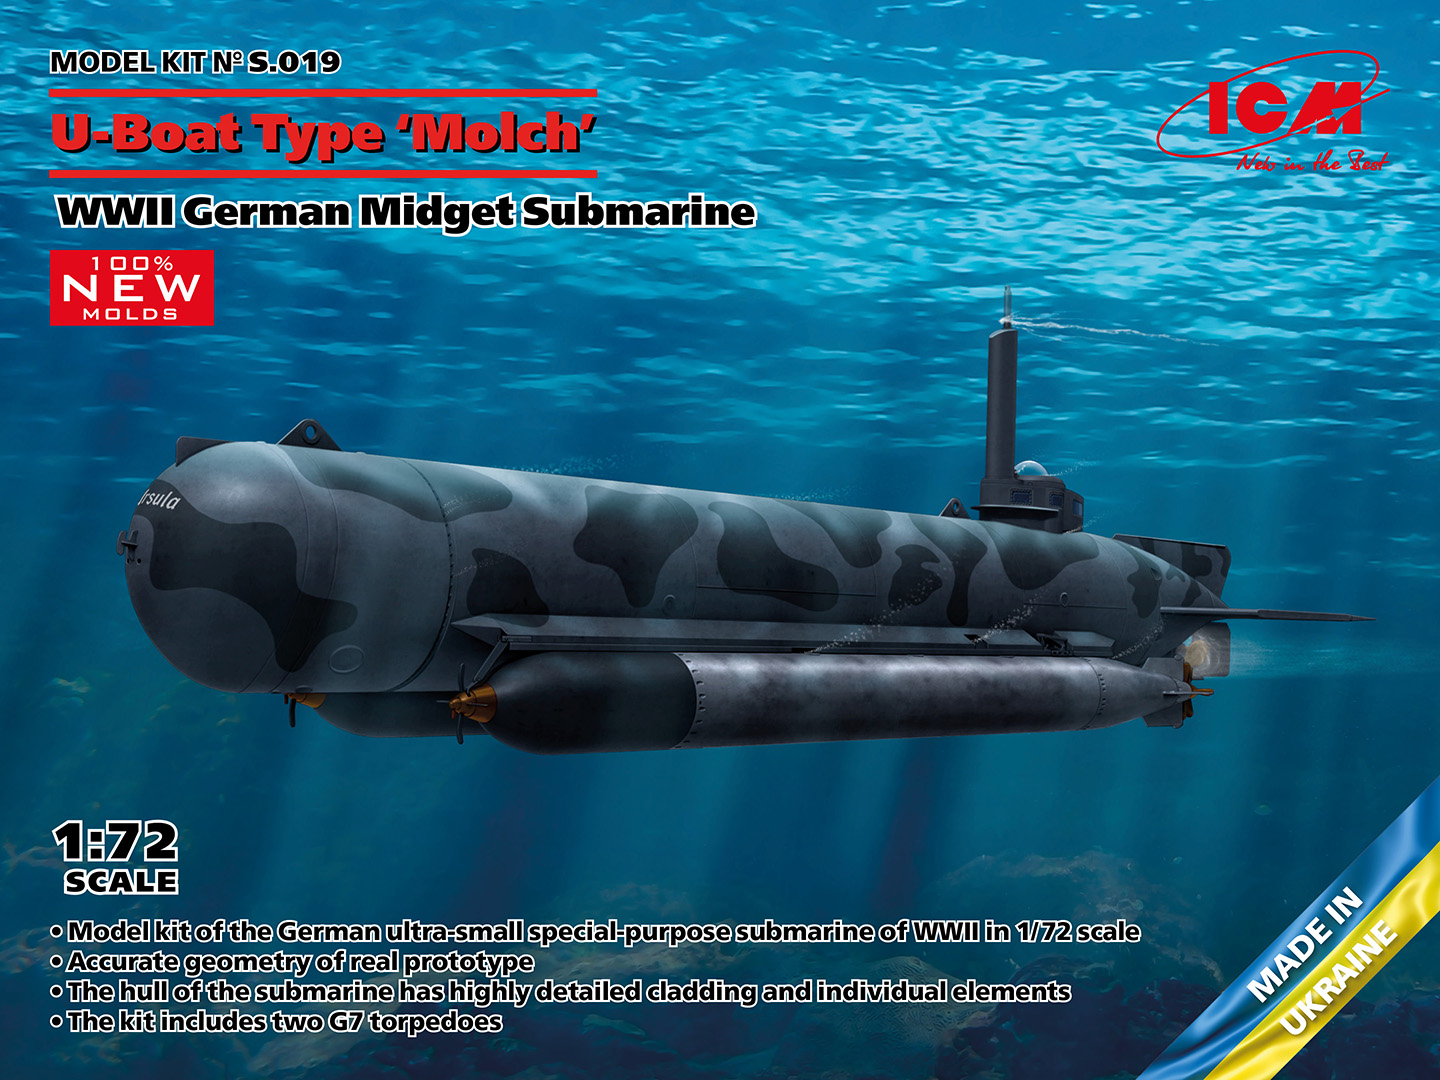 U-Boat Molch